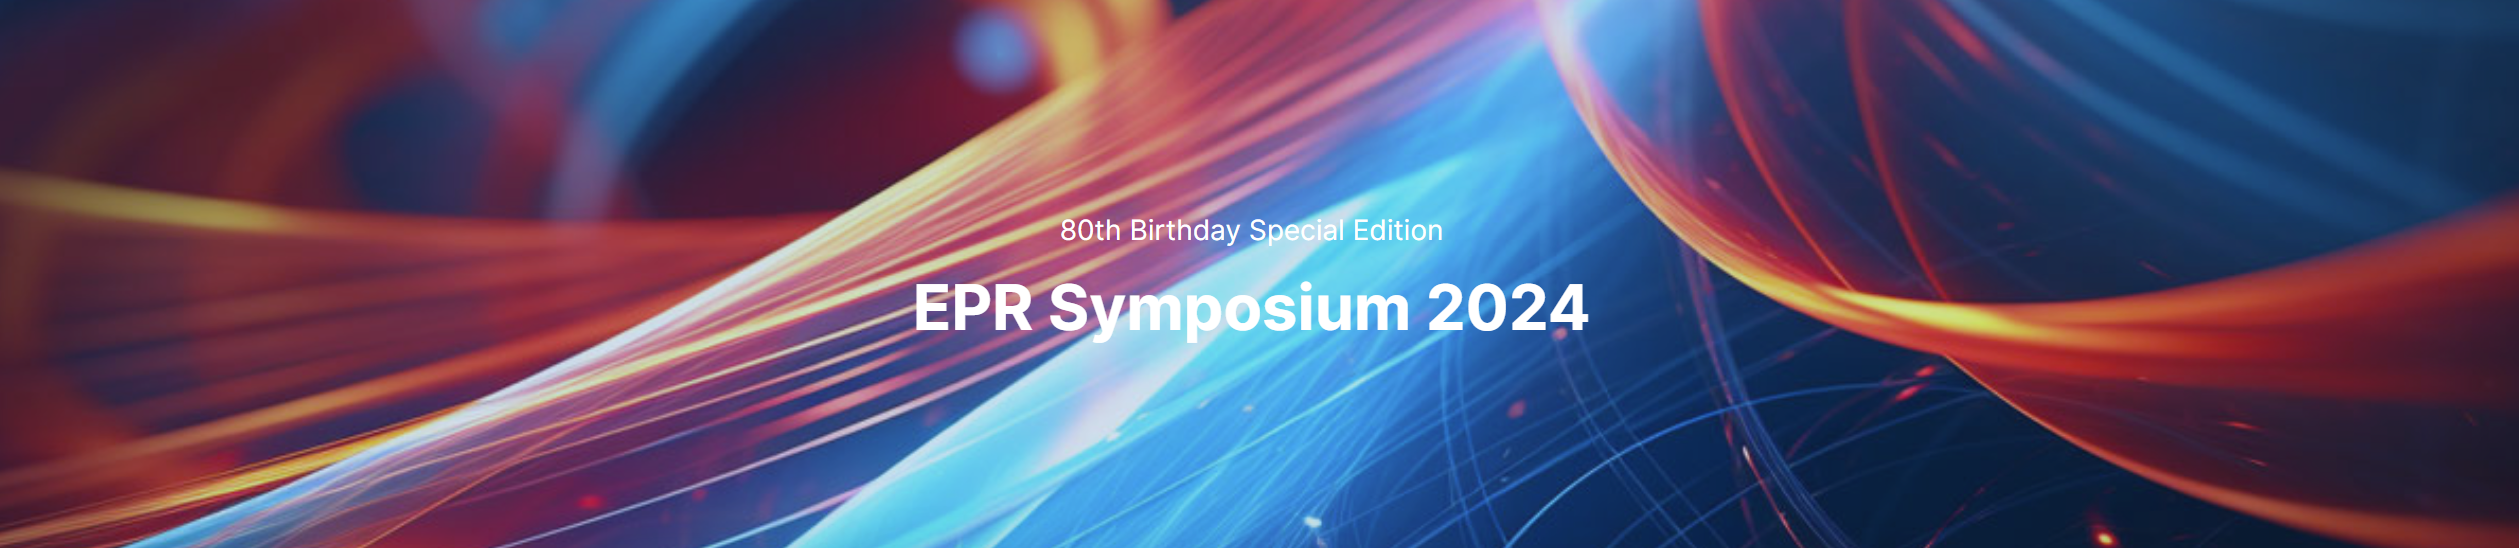 EPR Symposium 2024 Rocky Mountain Conference O2M Technologies